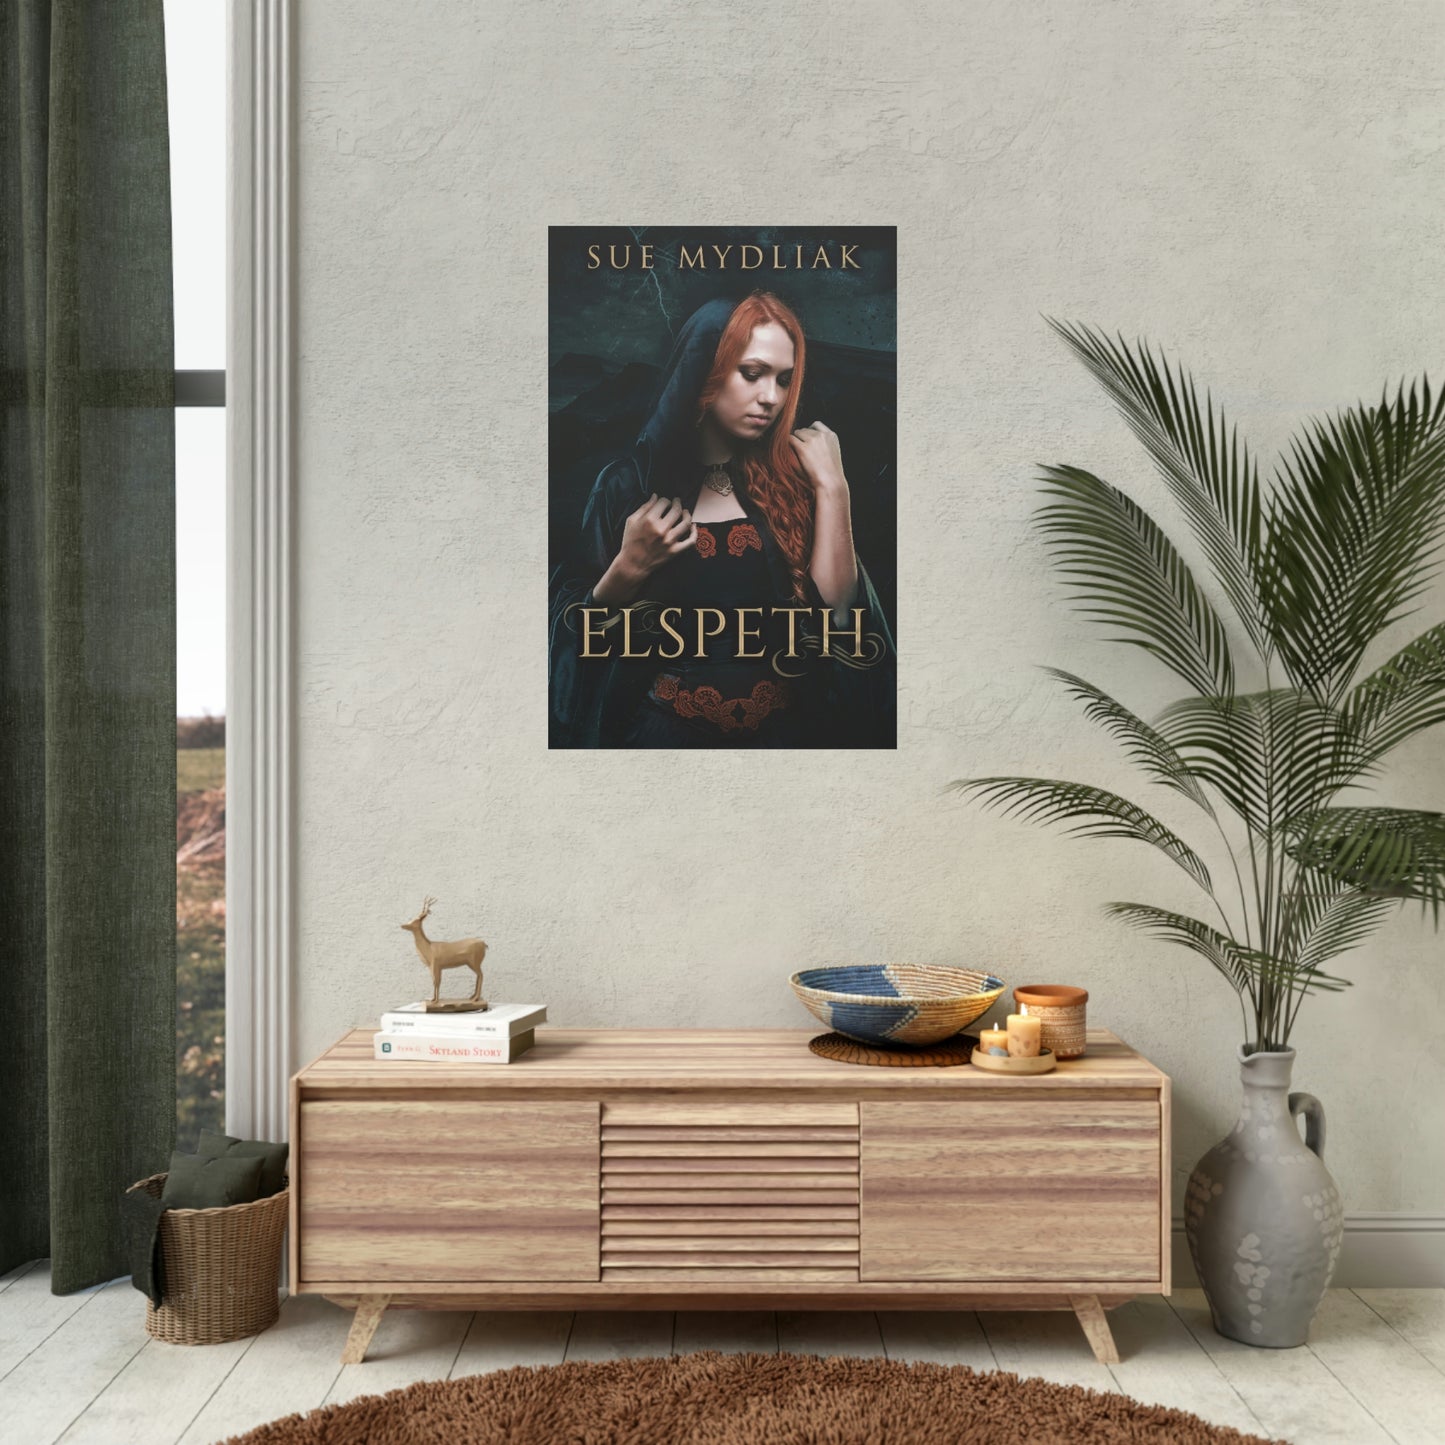 Elspeth - Rolled Poster